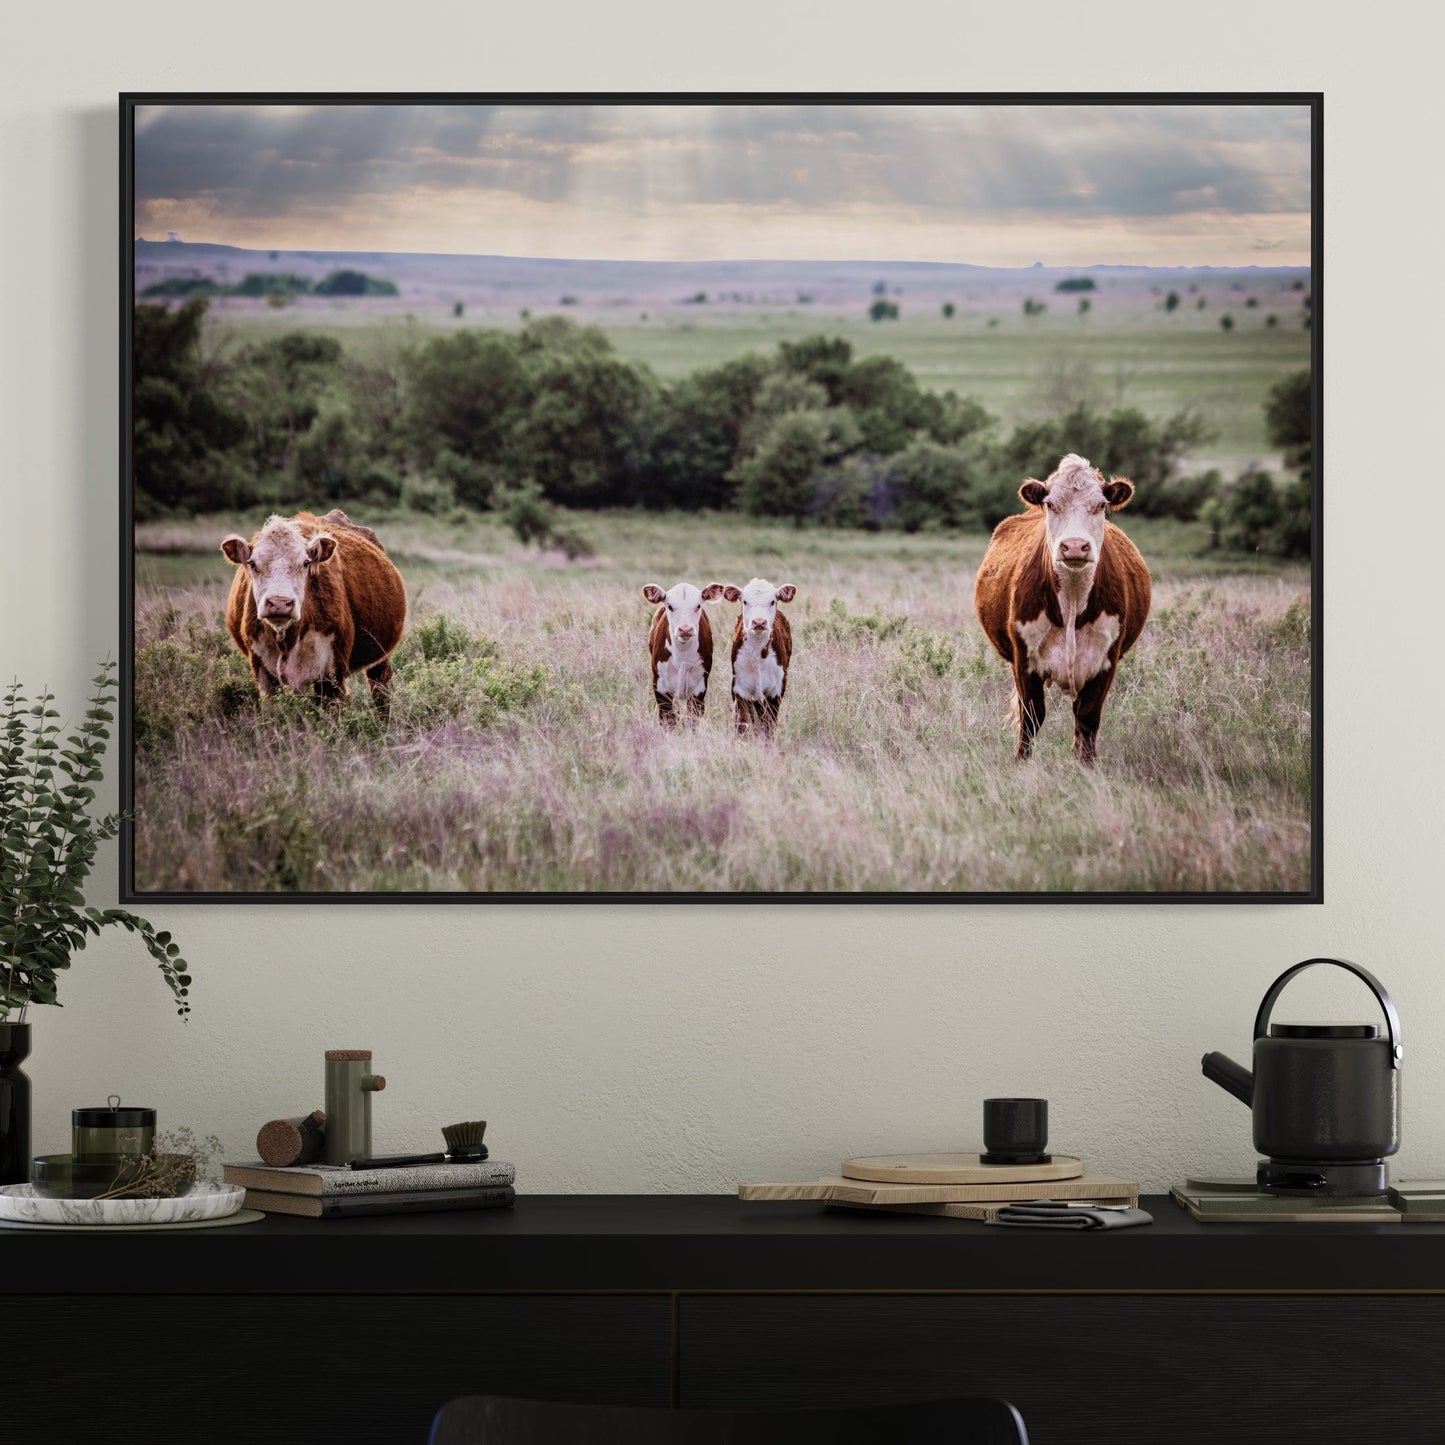 Twin Nursery Decor - Hereford Cattle Wall Art Teri James Photography